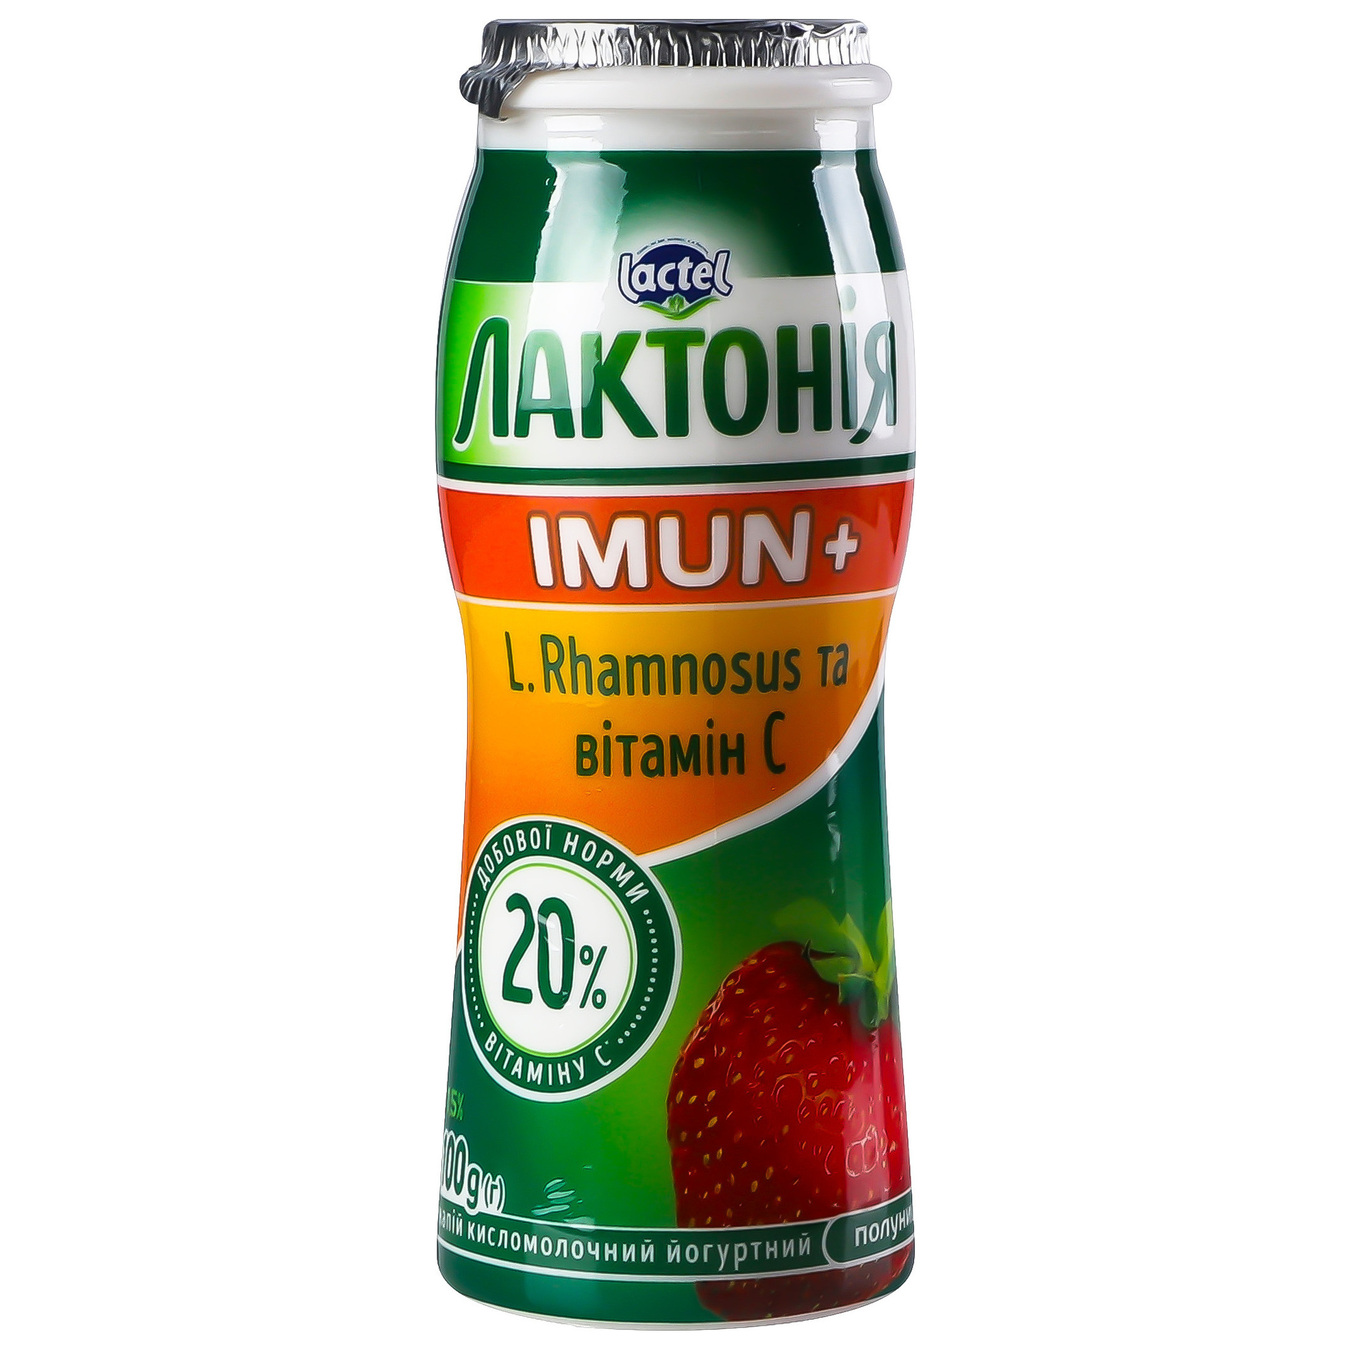 Lactonia Imun strawberry with probiotic L. Rhamnosus vitamin C Sour milk drink 1.5% 100g